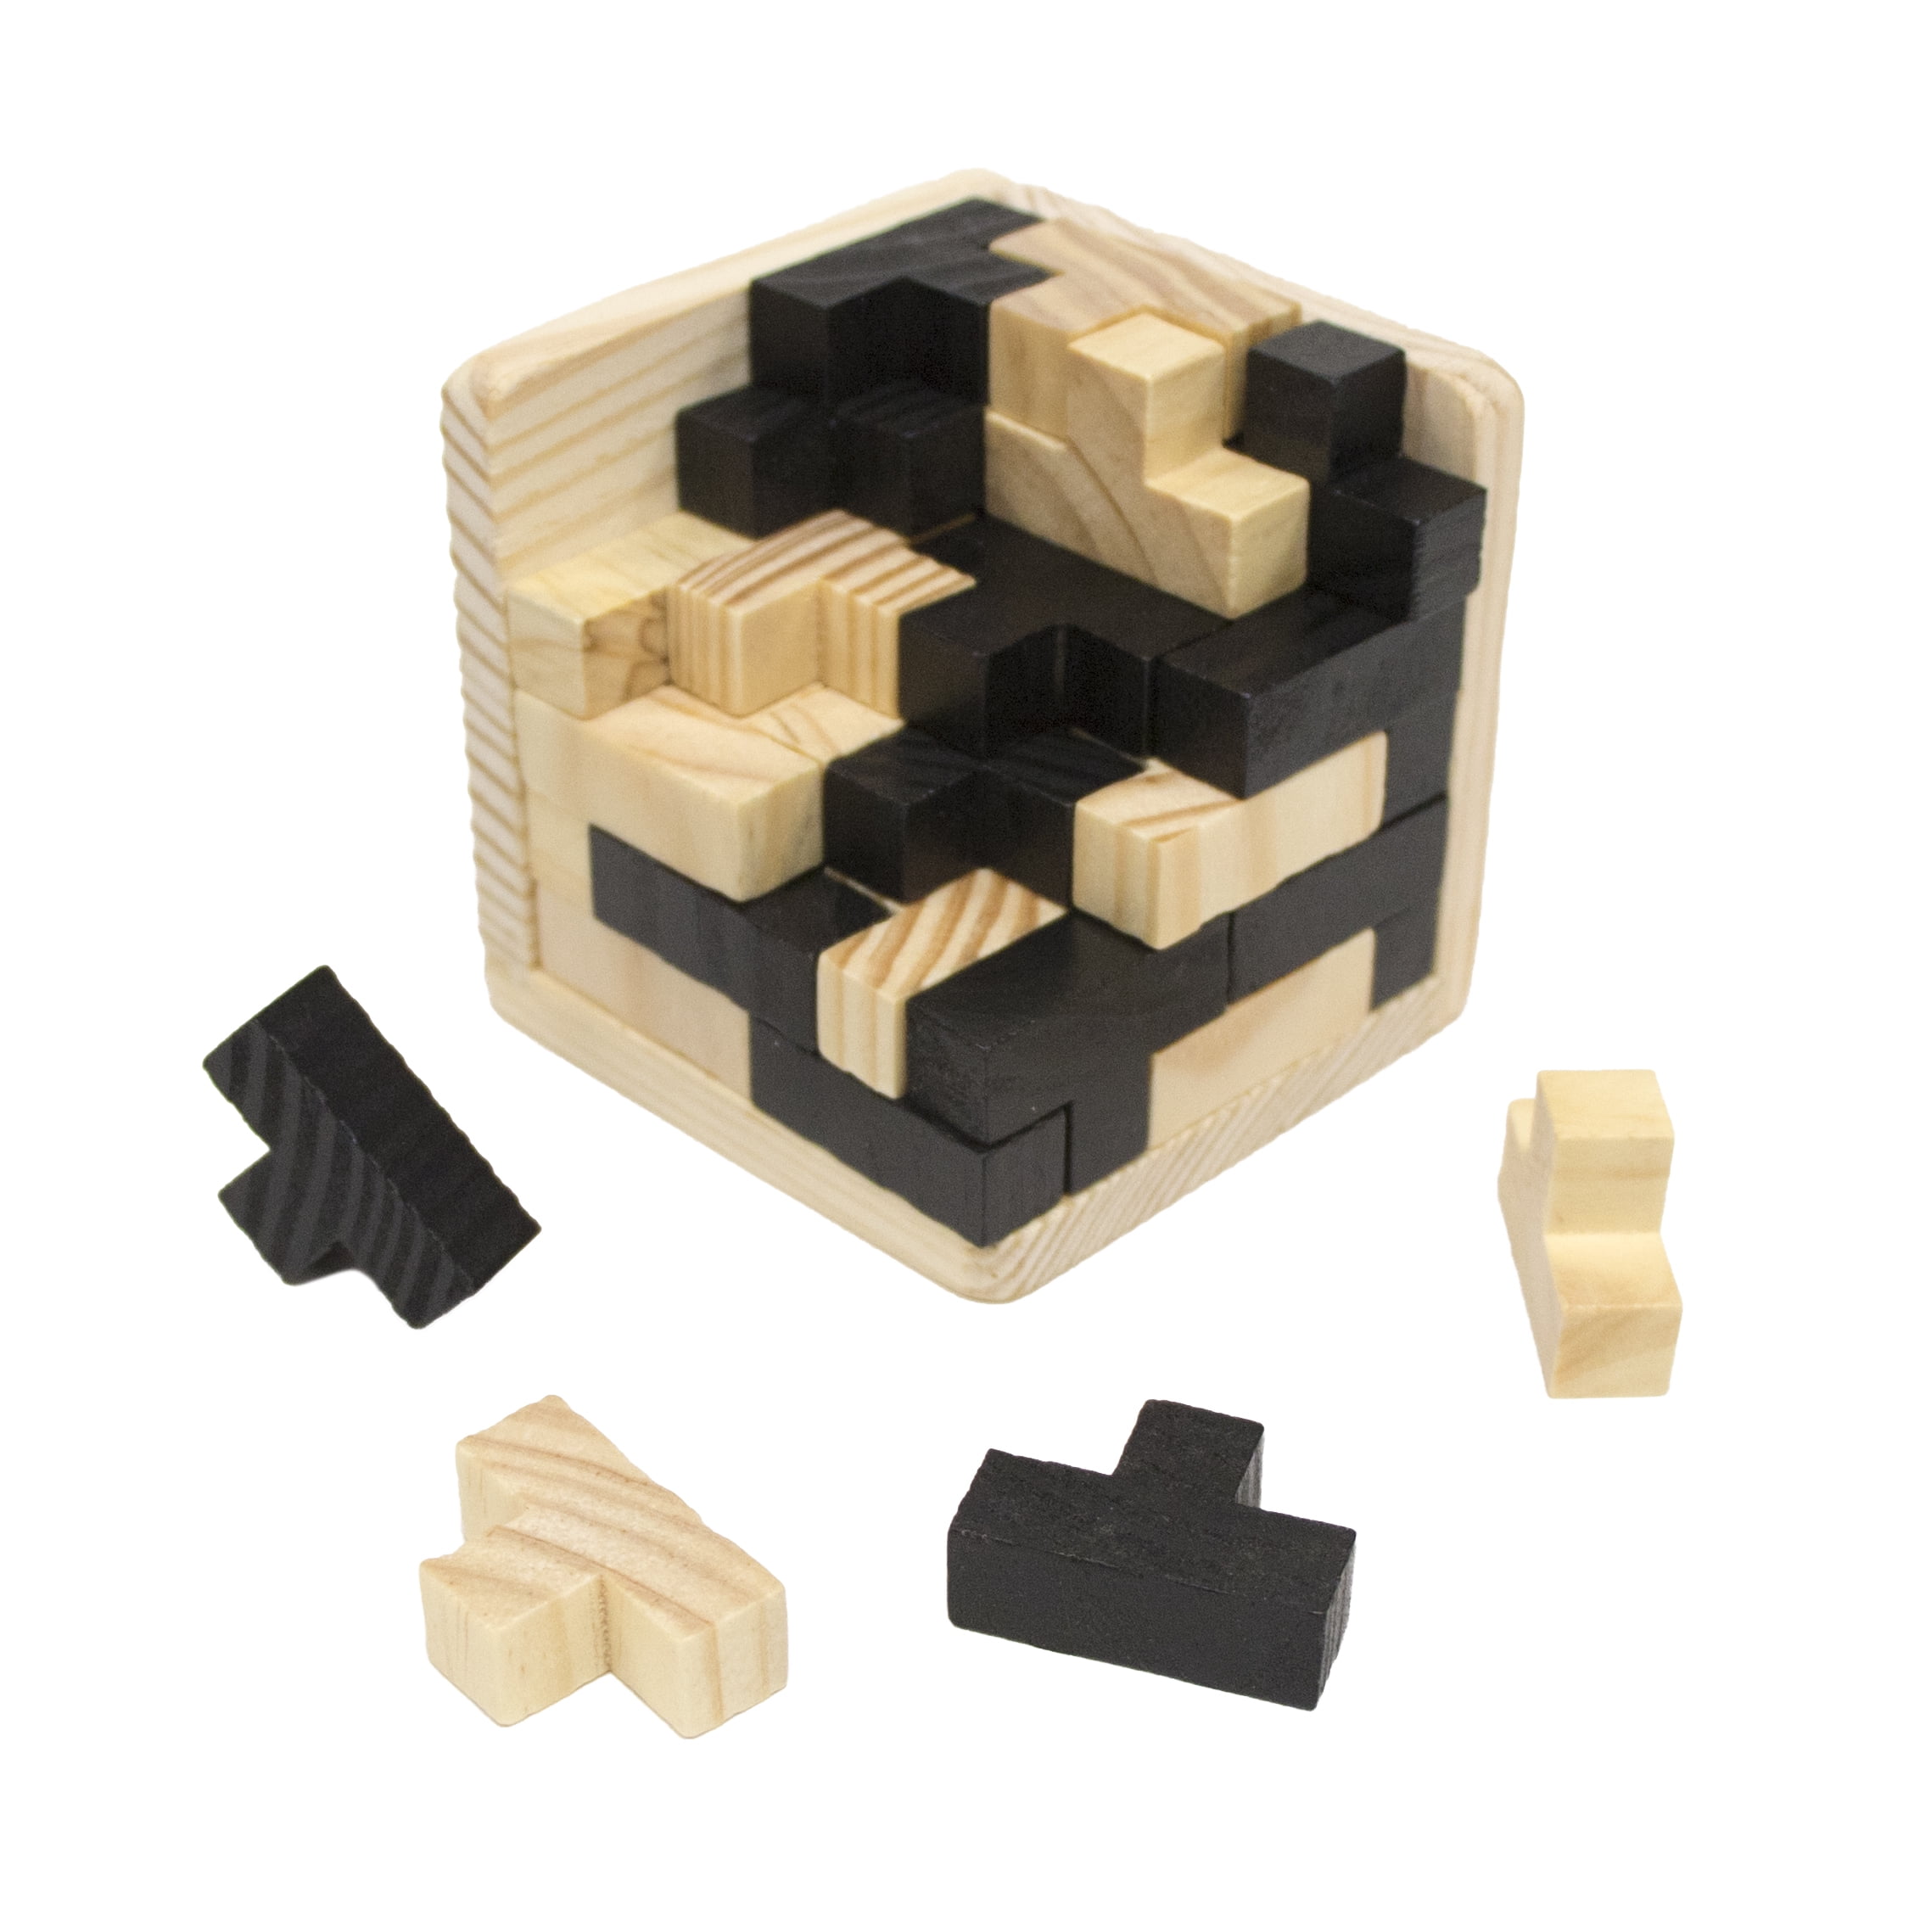 Tetris 3D Wooden Cube Multi-color Magic Puzzle Educational Brain Teaser Game Toy 